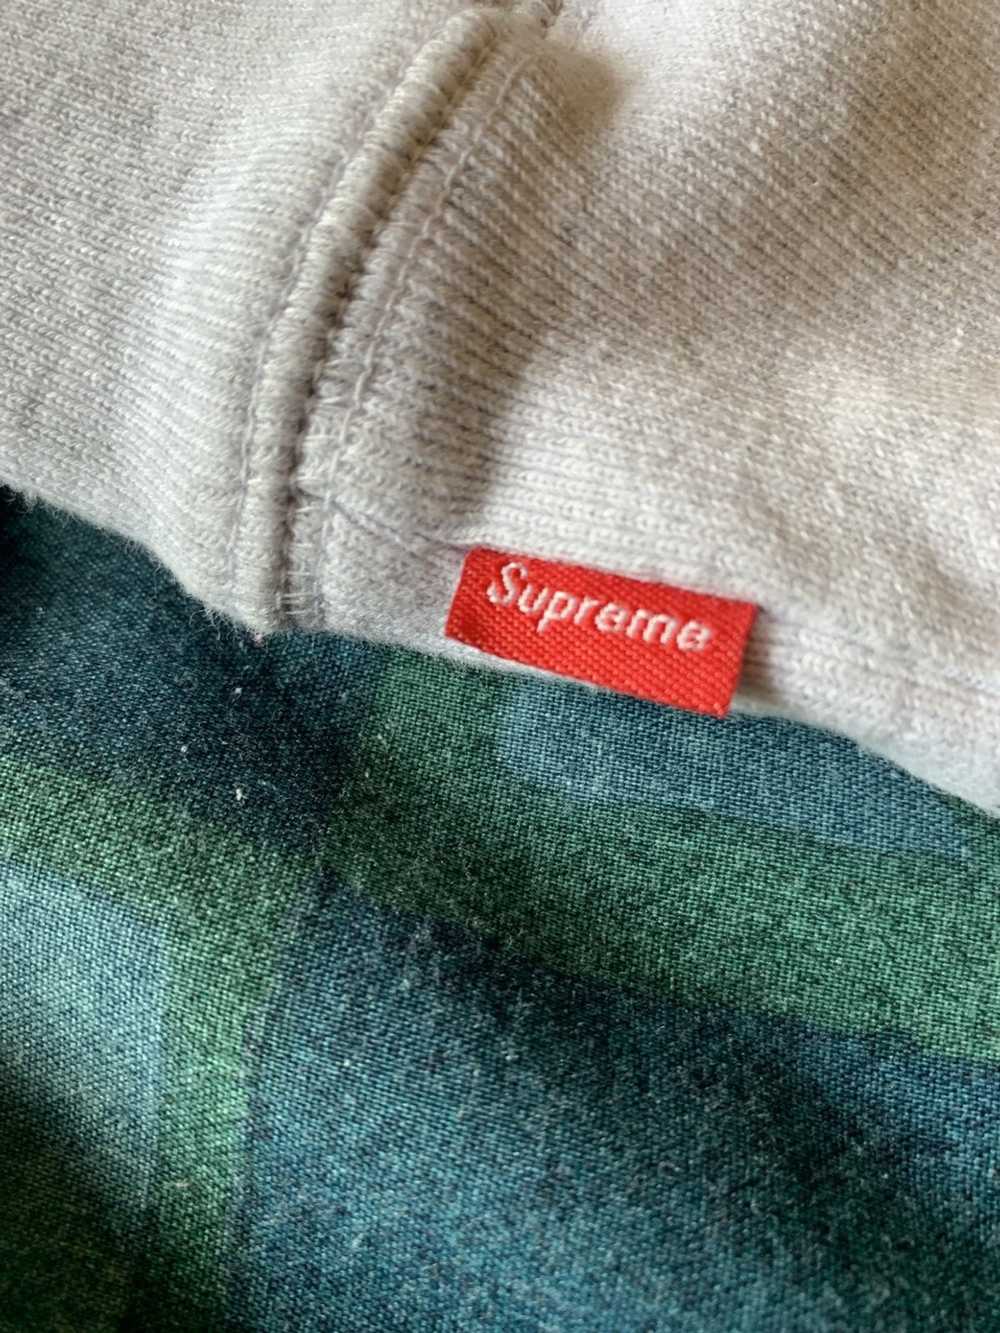 Supreme Supreme Grey Box Logo Sweater - image 5